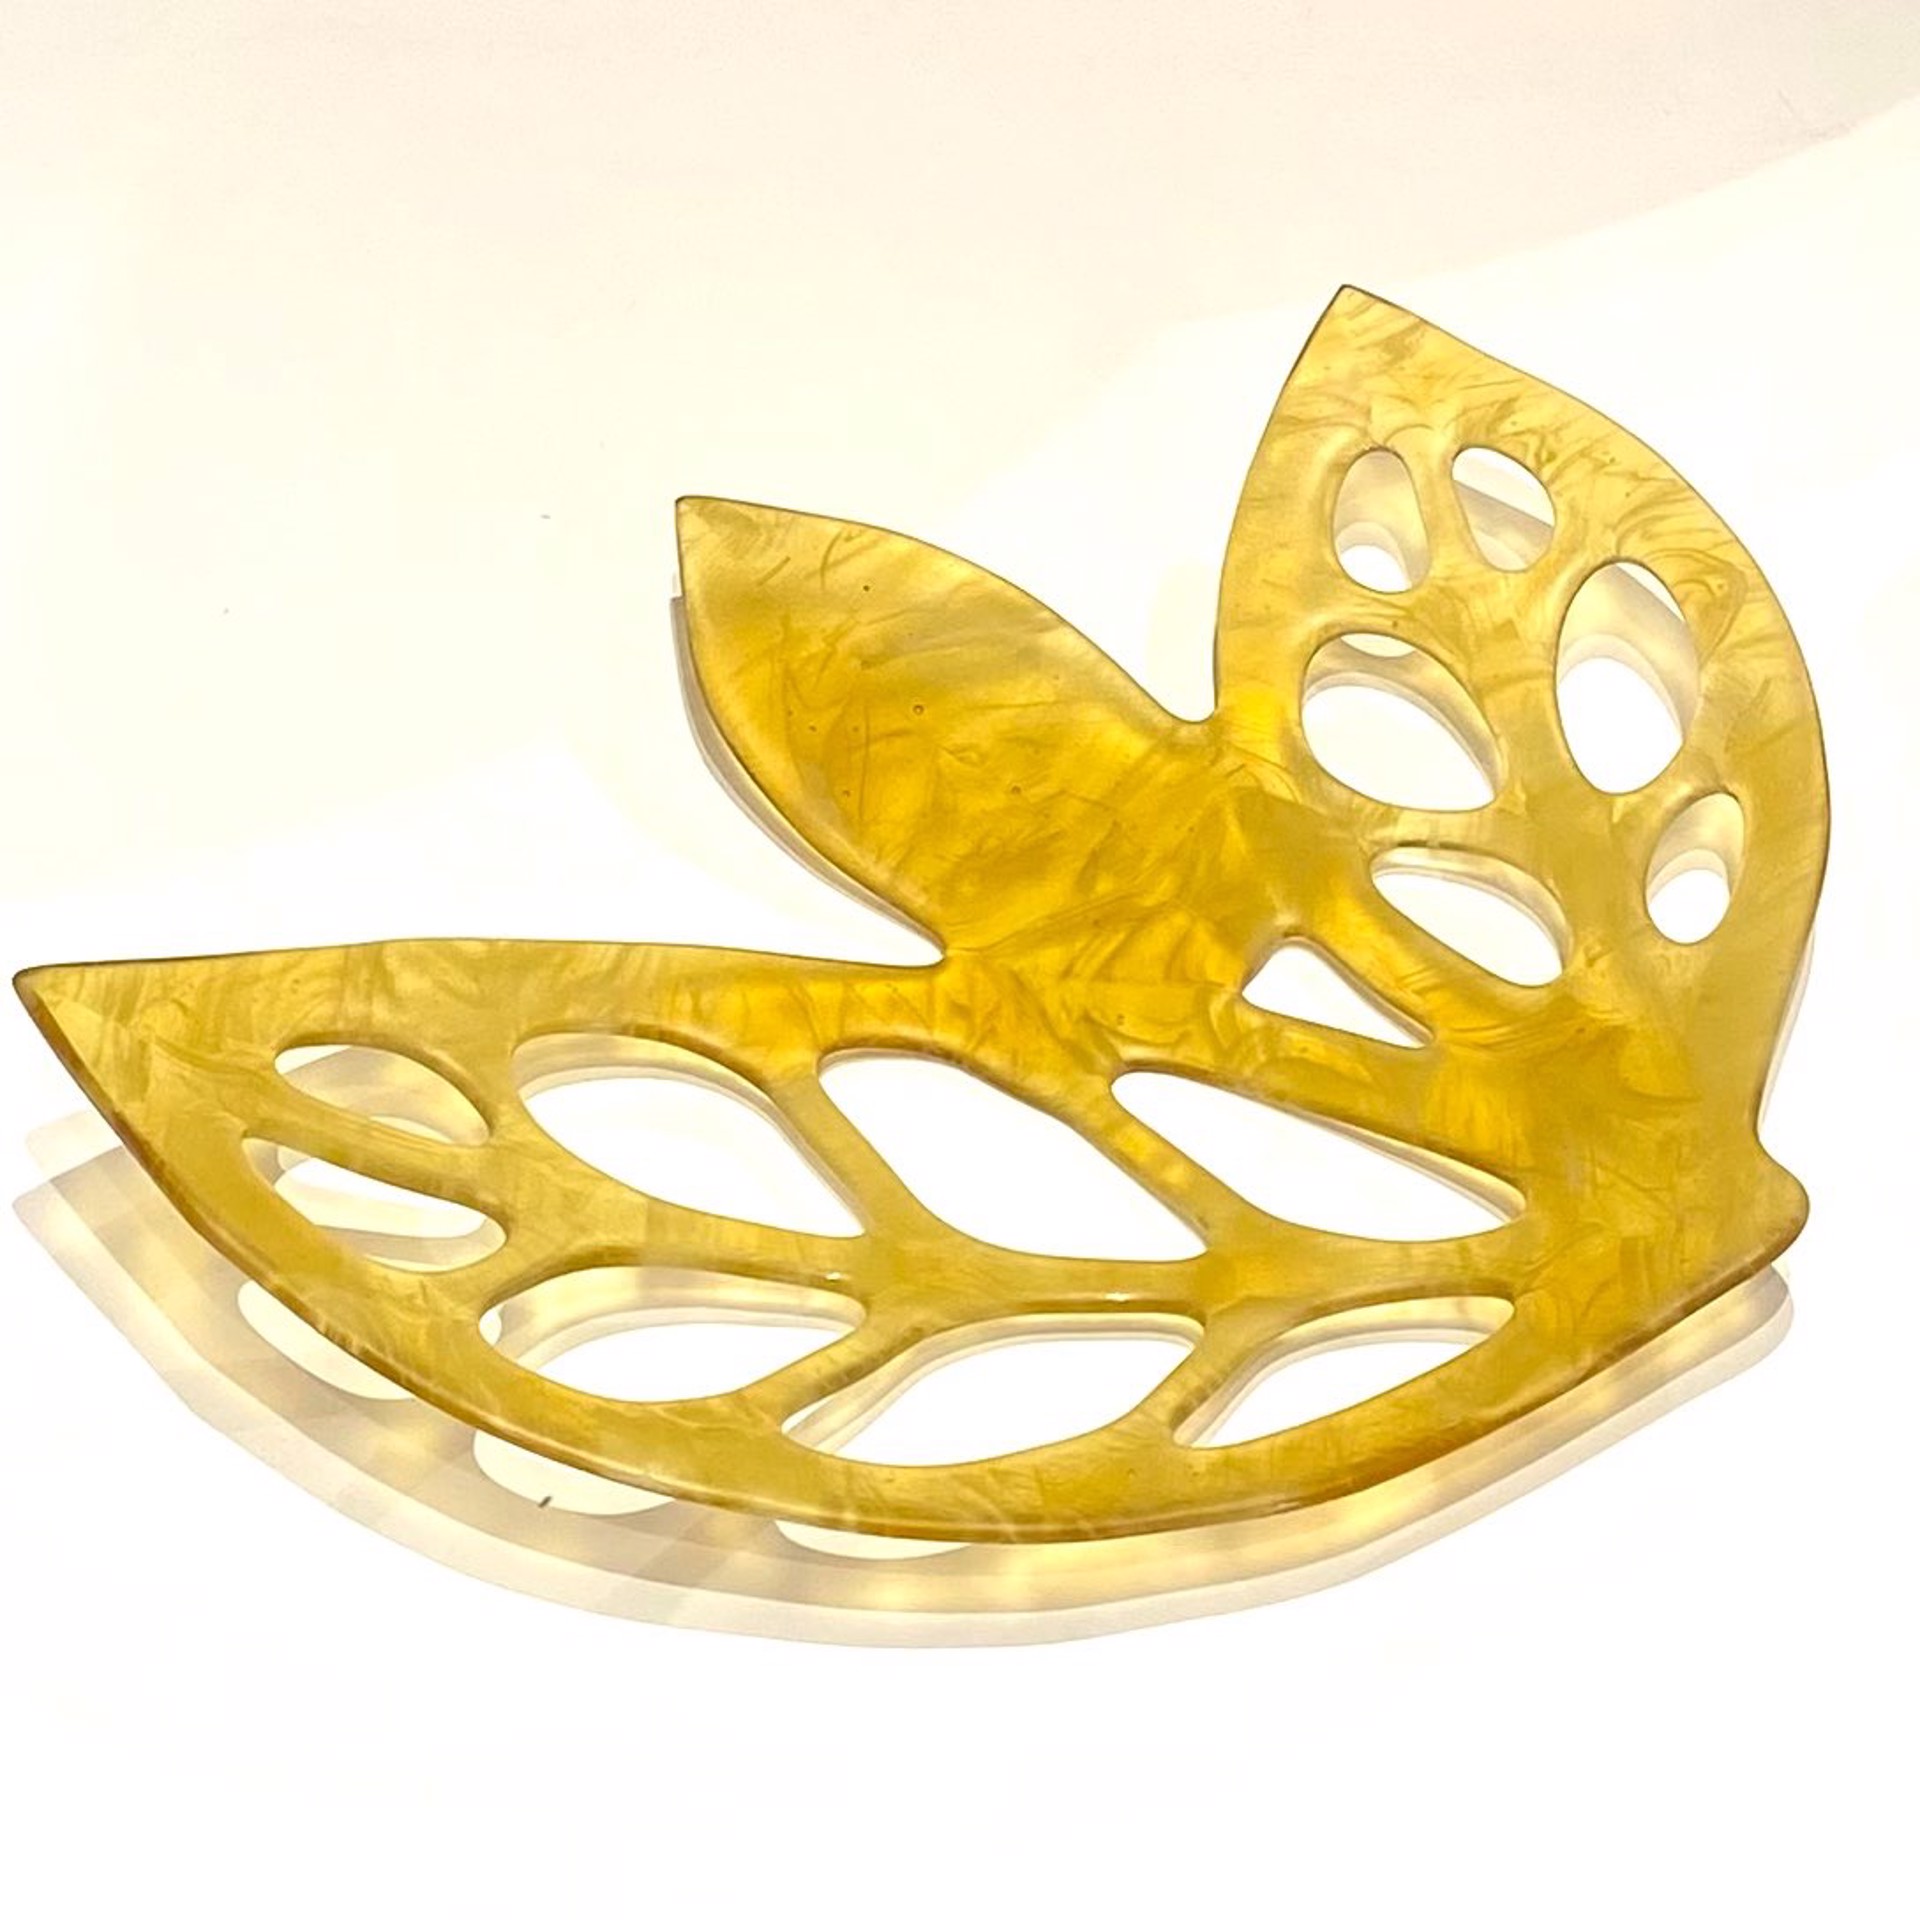 Glass Leaf Sculpture GR22-14 by Greg Rawls